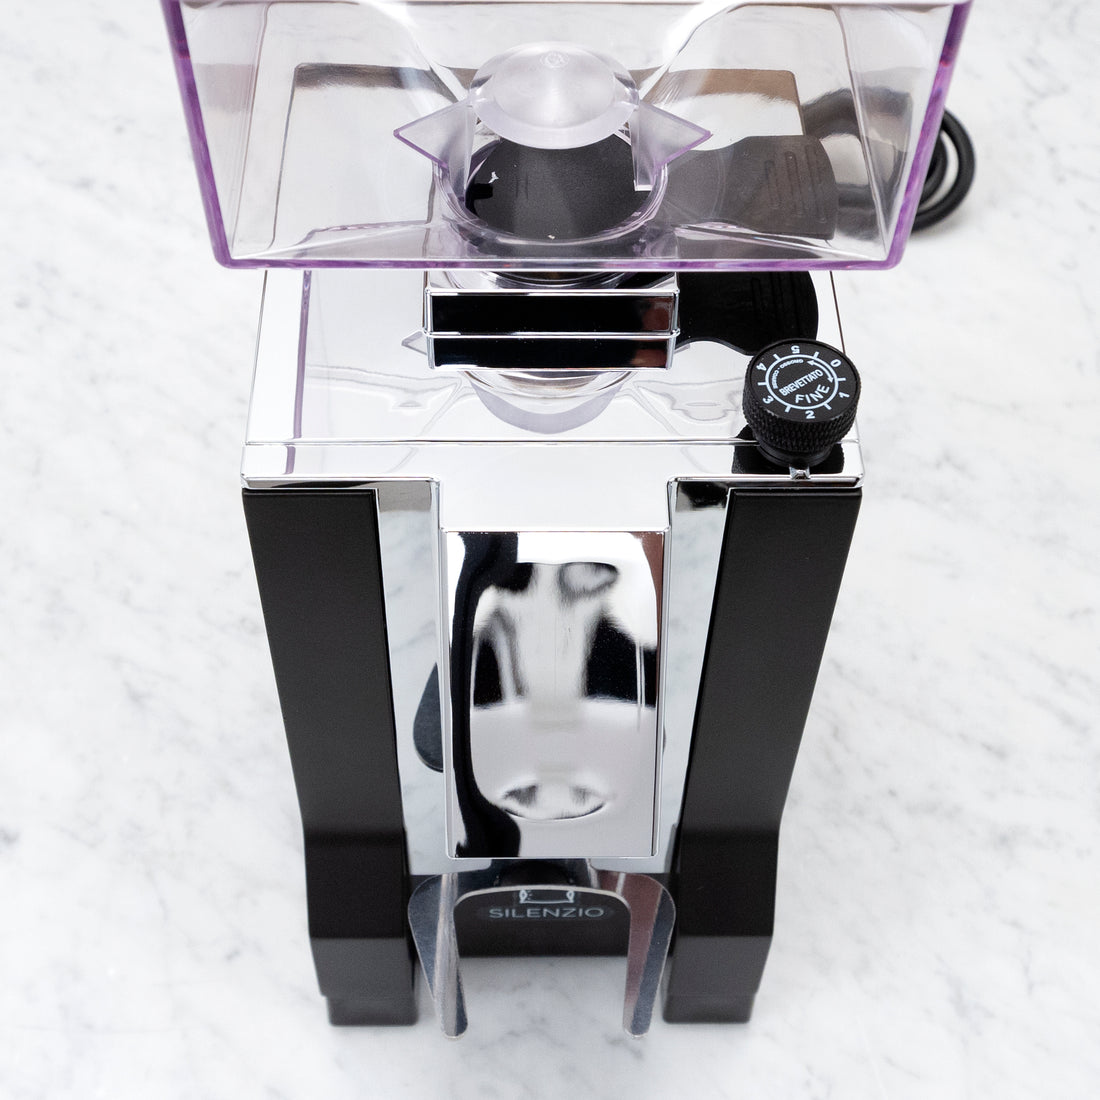 Eureka Mignon Silenzio Espresso Grinder micrometric grind adjustment knob